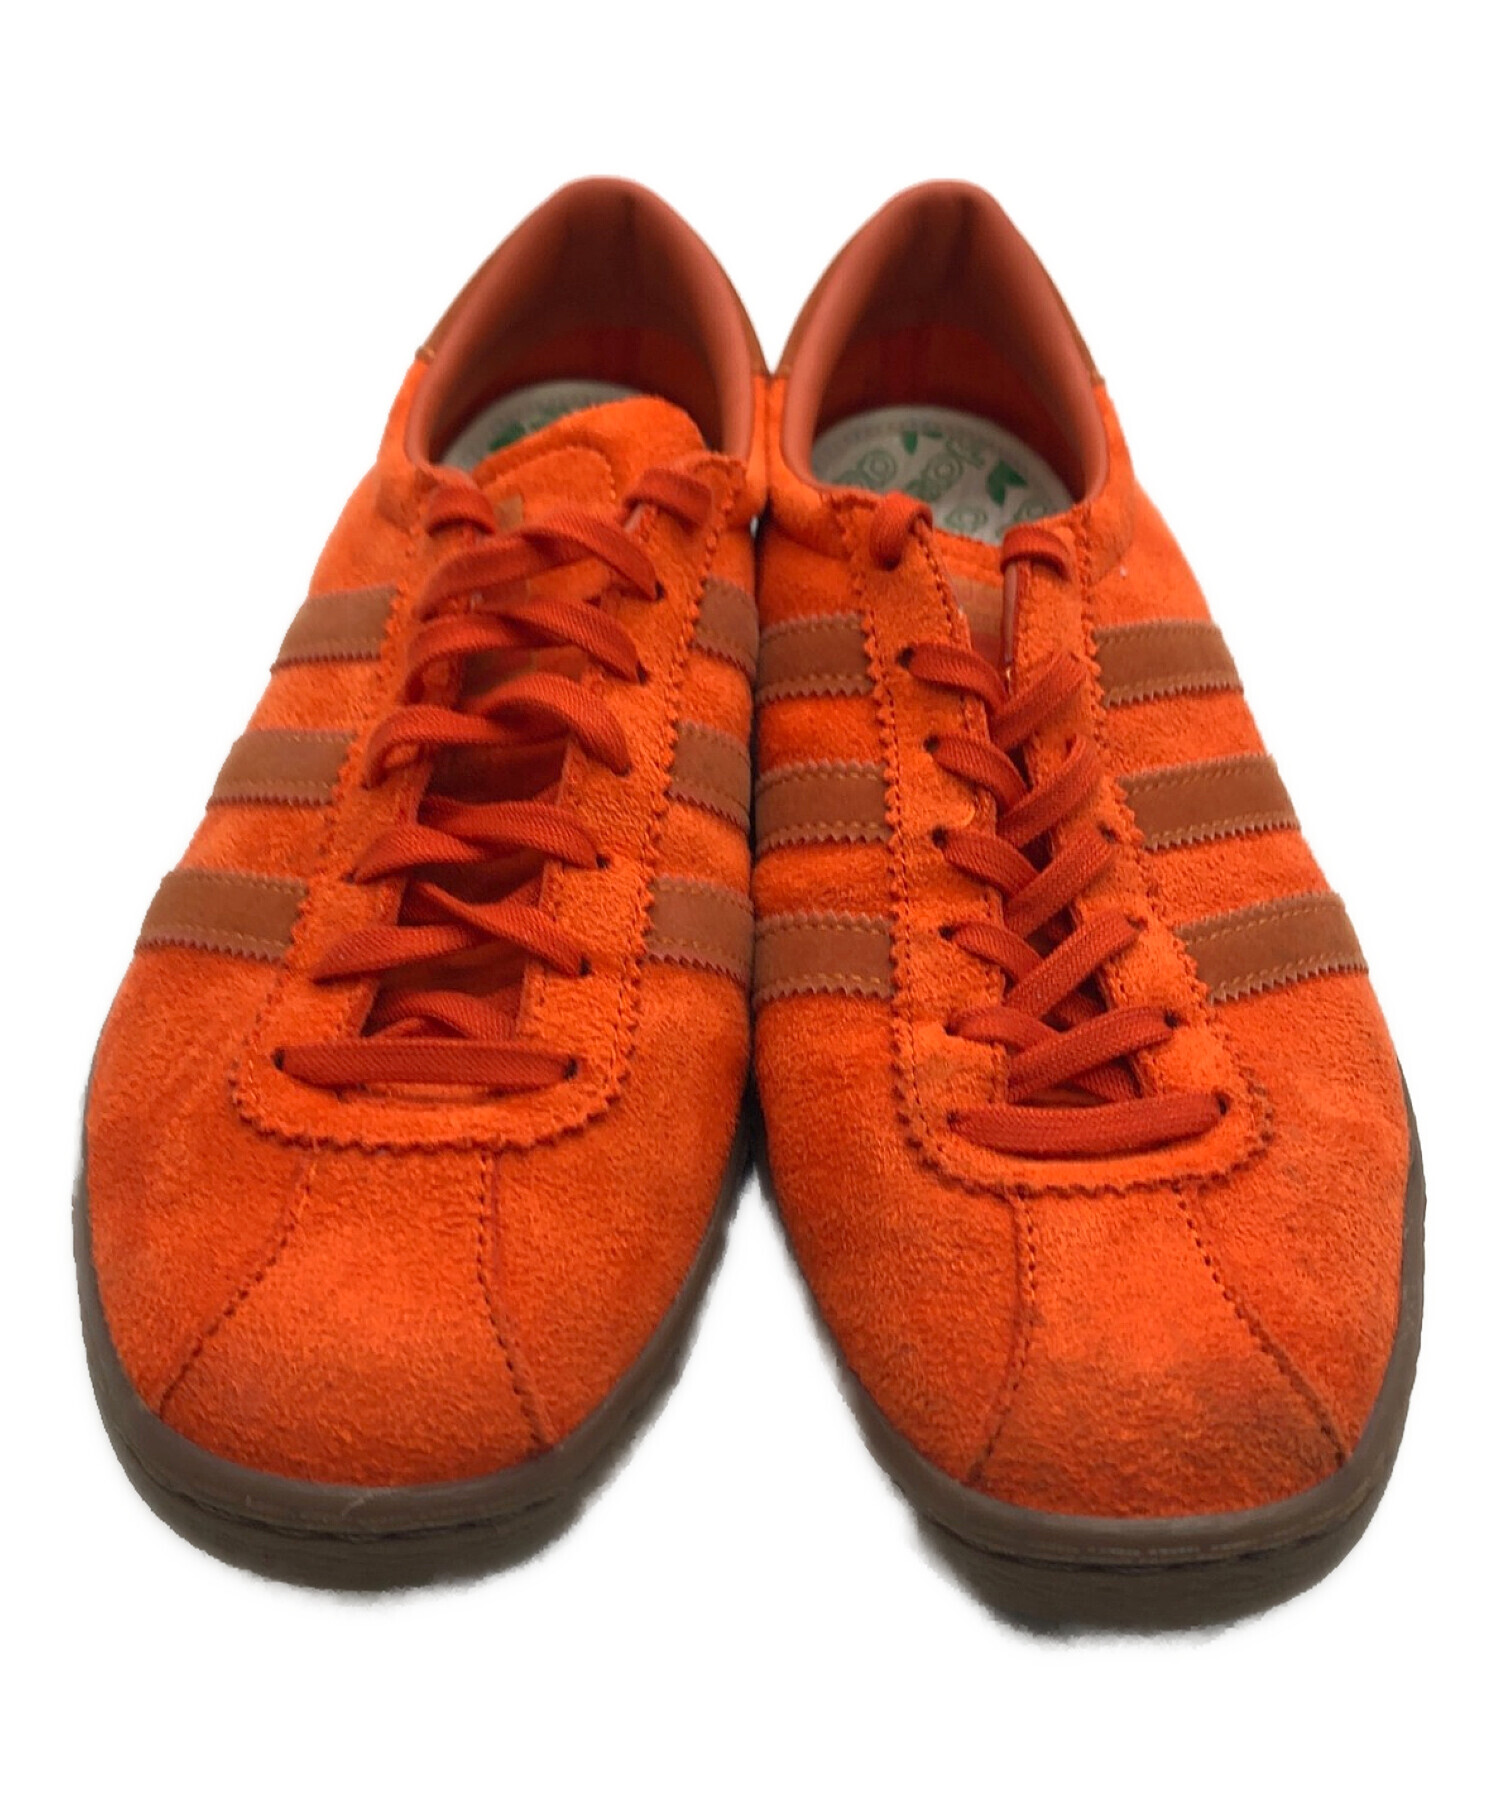 adidas originals (アディダスオリジナル) TOBACCO GRUEN オレンジ サイズ:26.0㎝